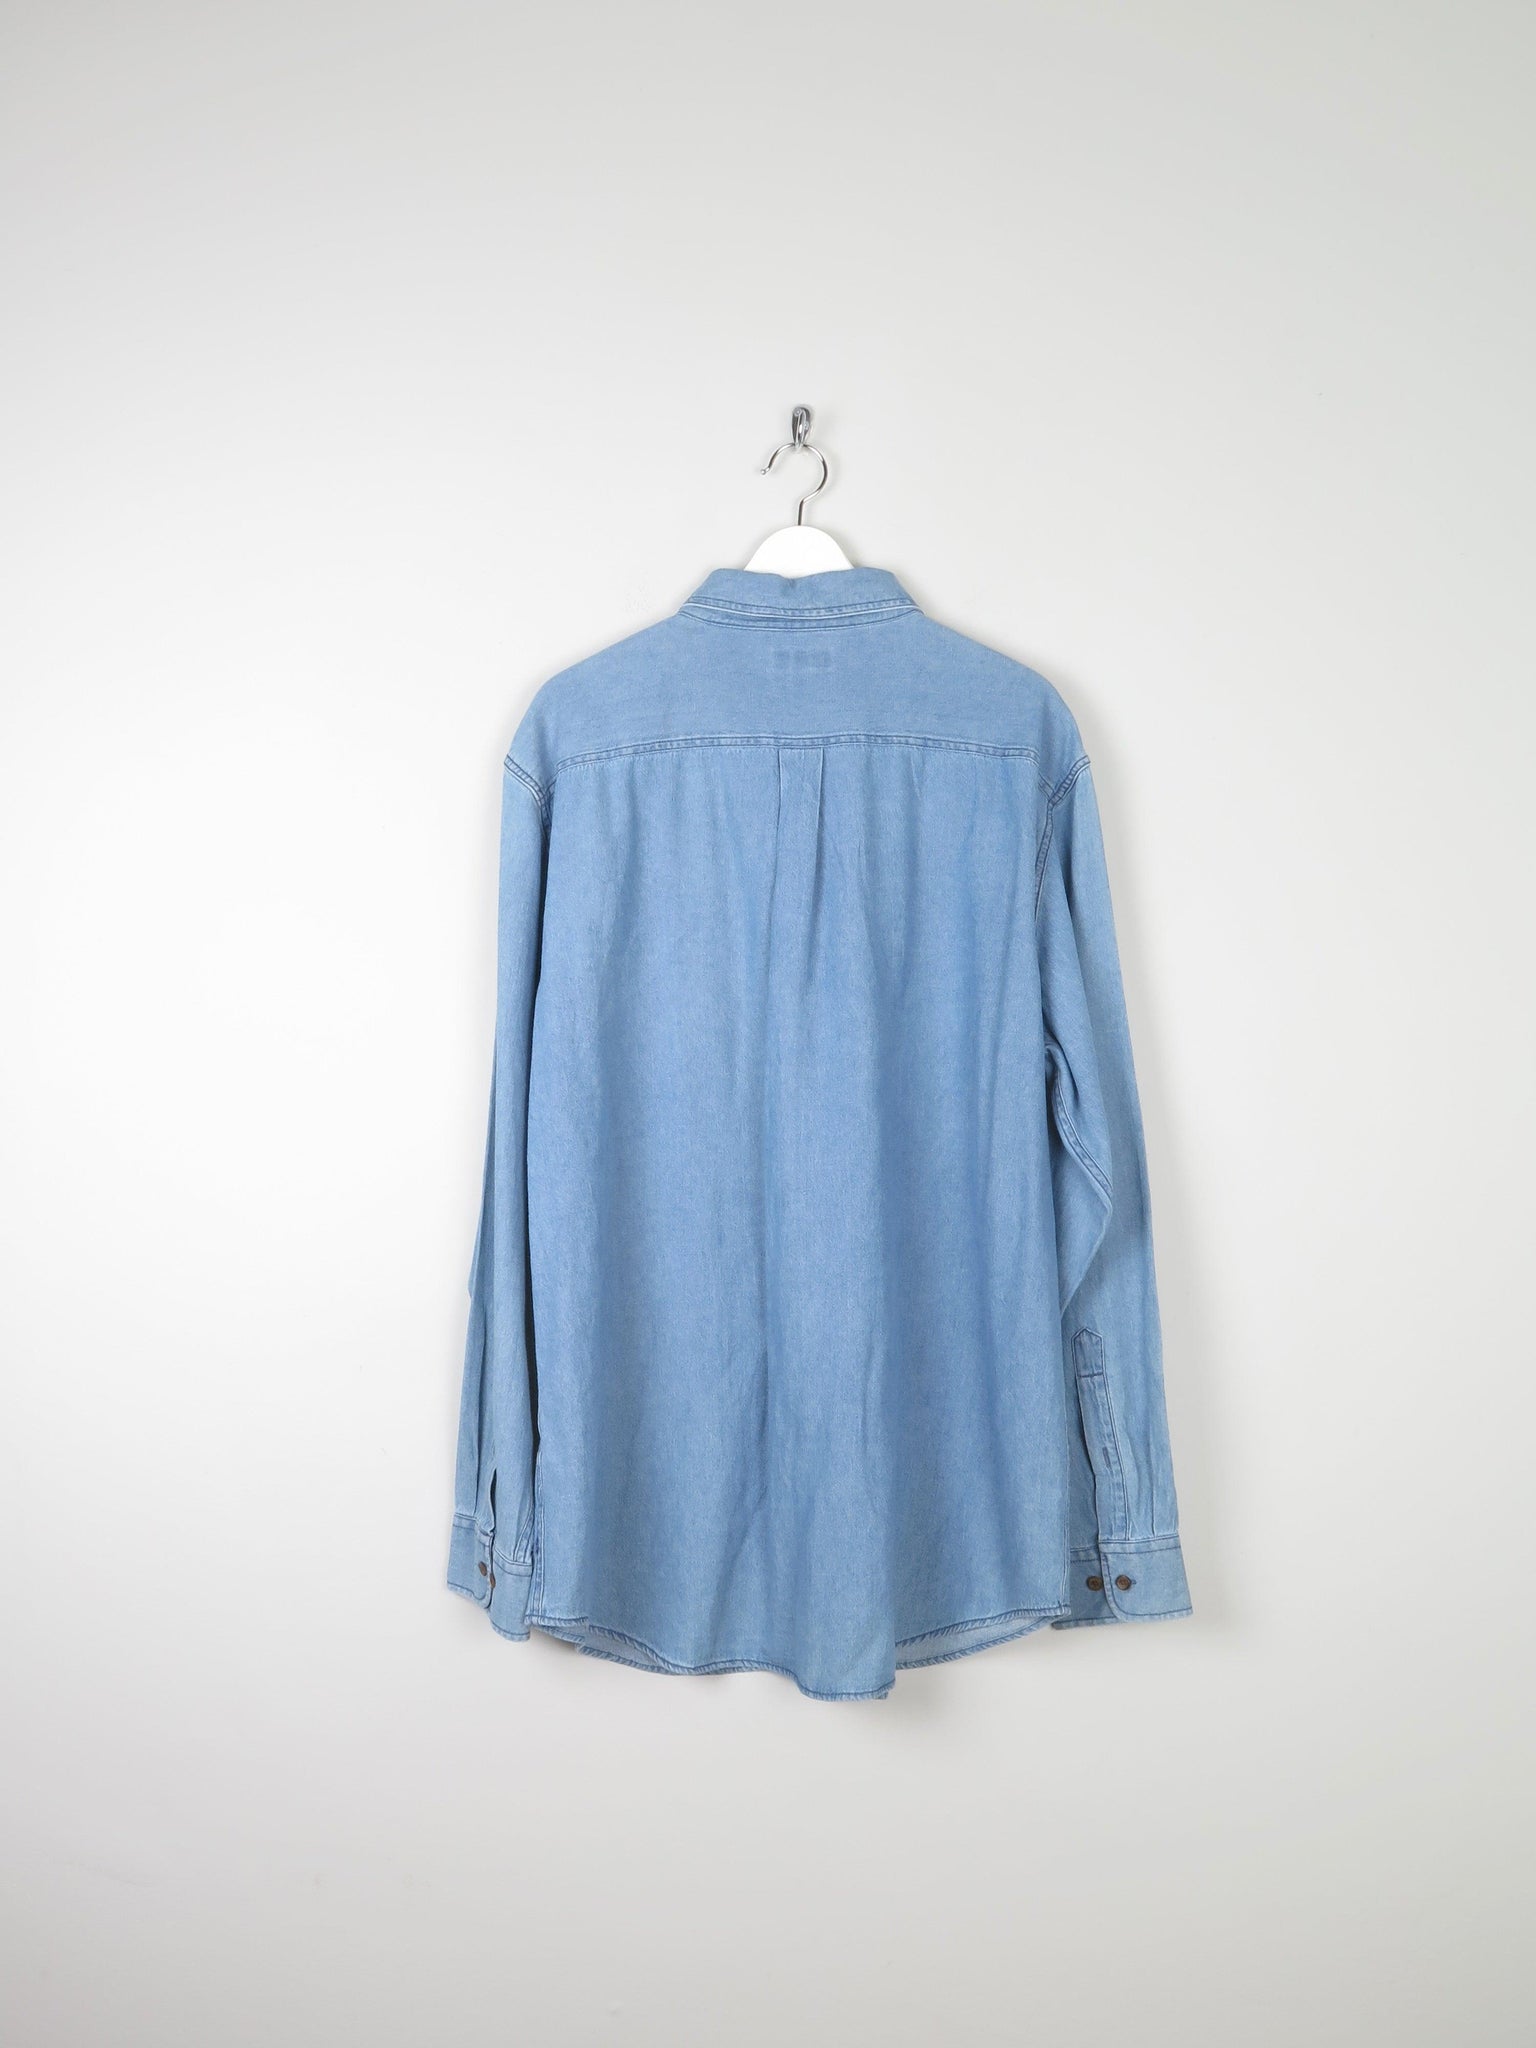 Mens Blue Denim Shirt New XL - The Harlequin